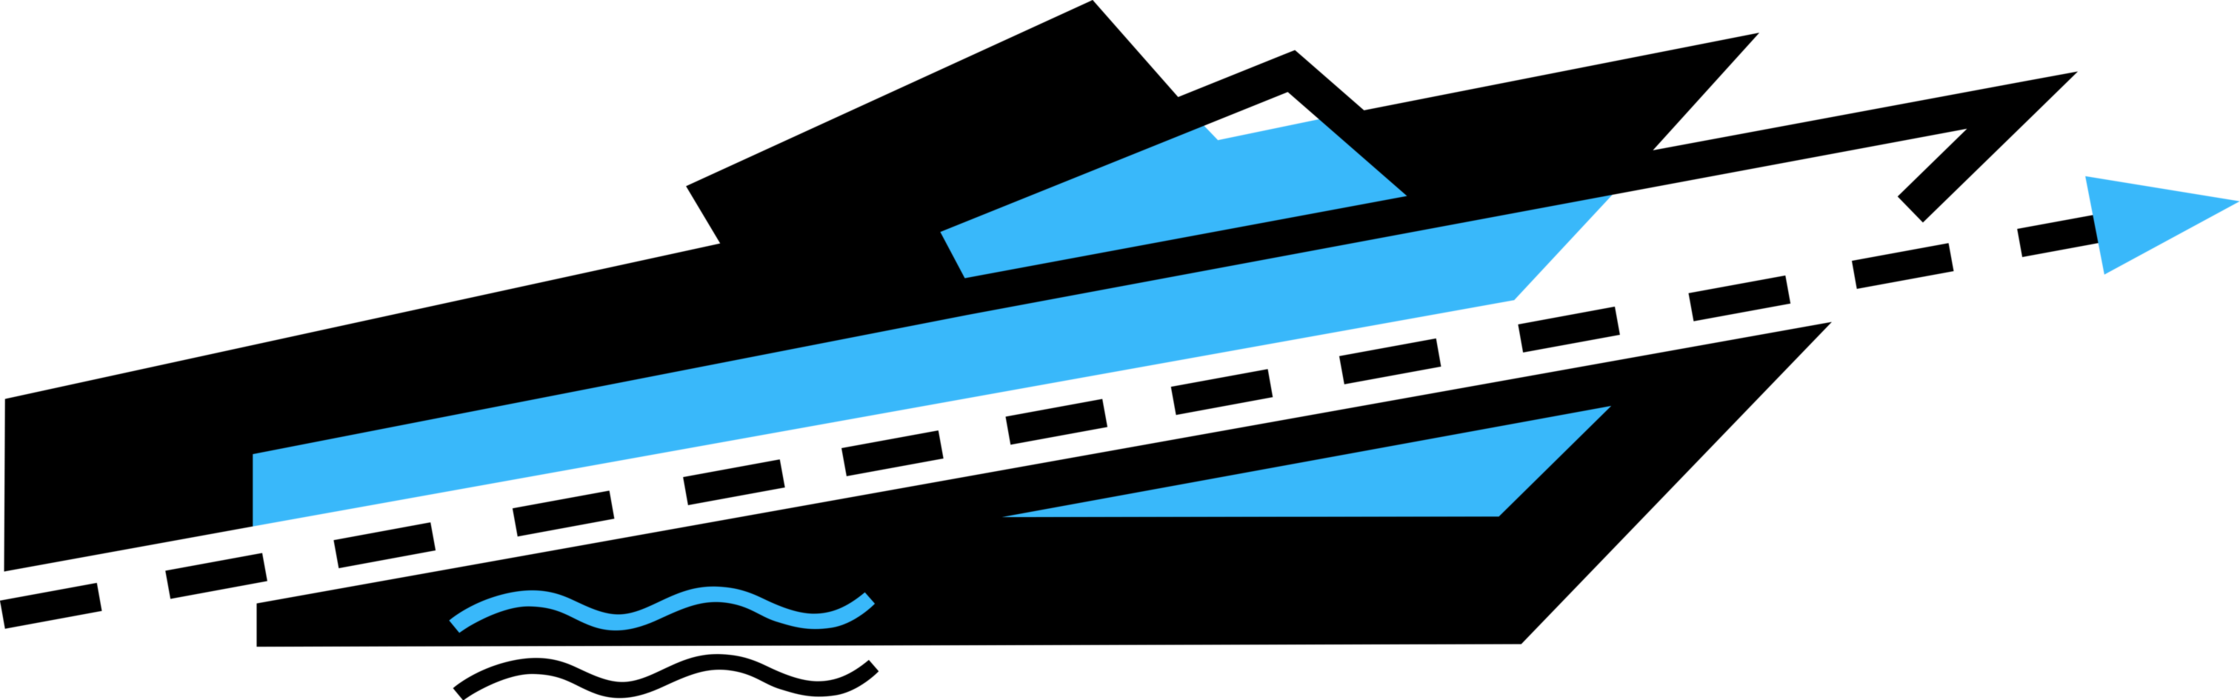 Vector Illustration of Speedboat Motorboat or Pleasure Craft Watercraft Boat Running in Ocean Waves